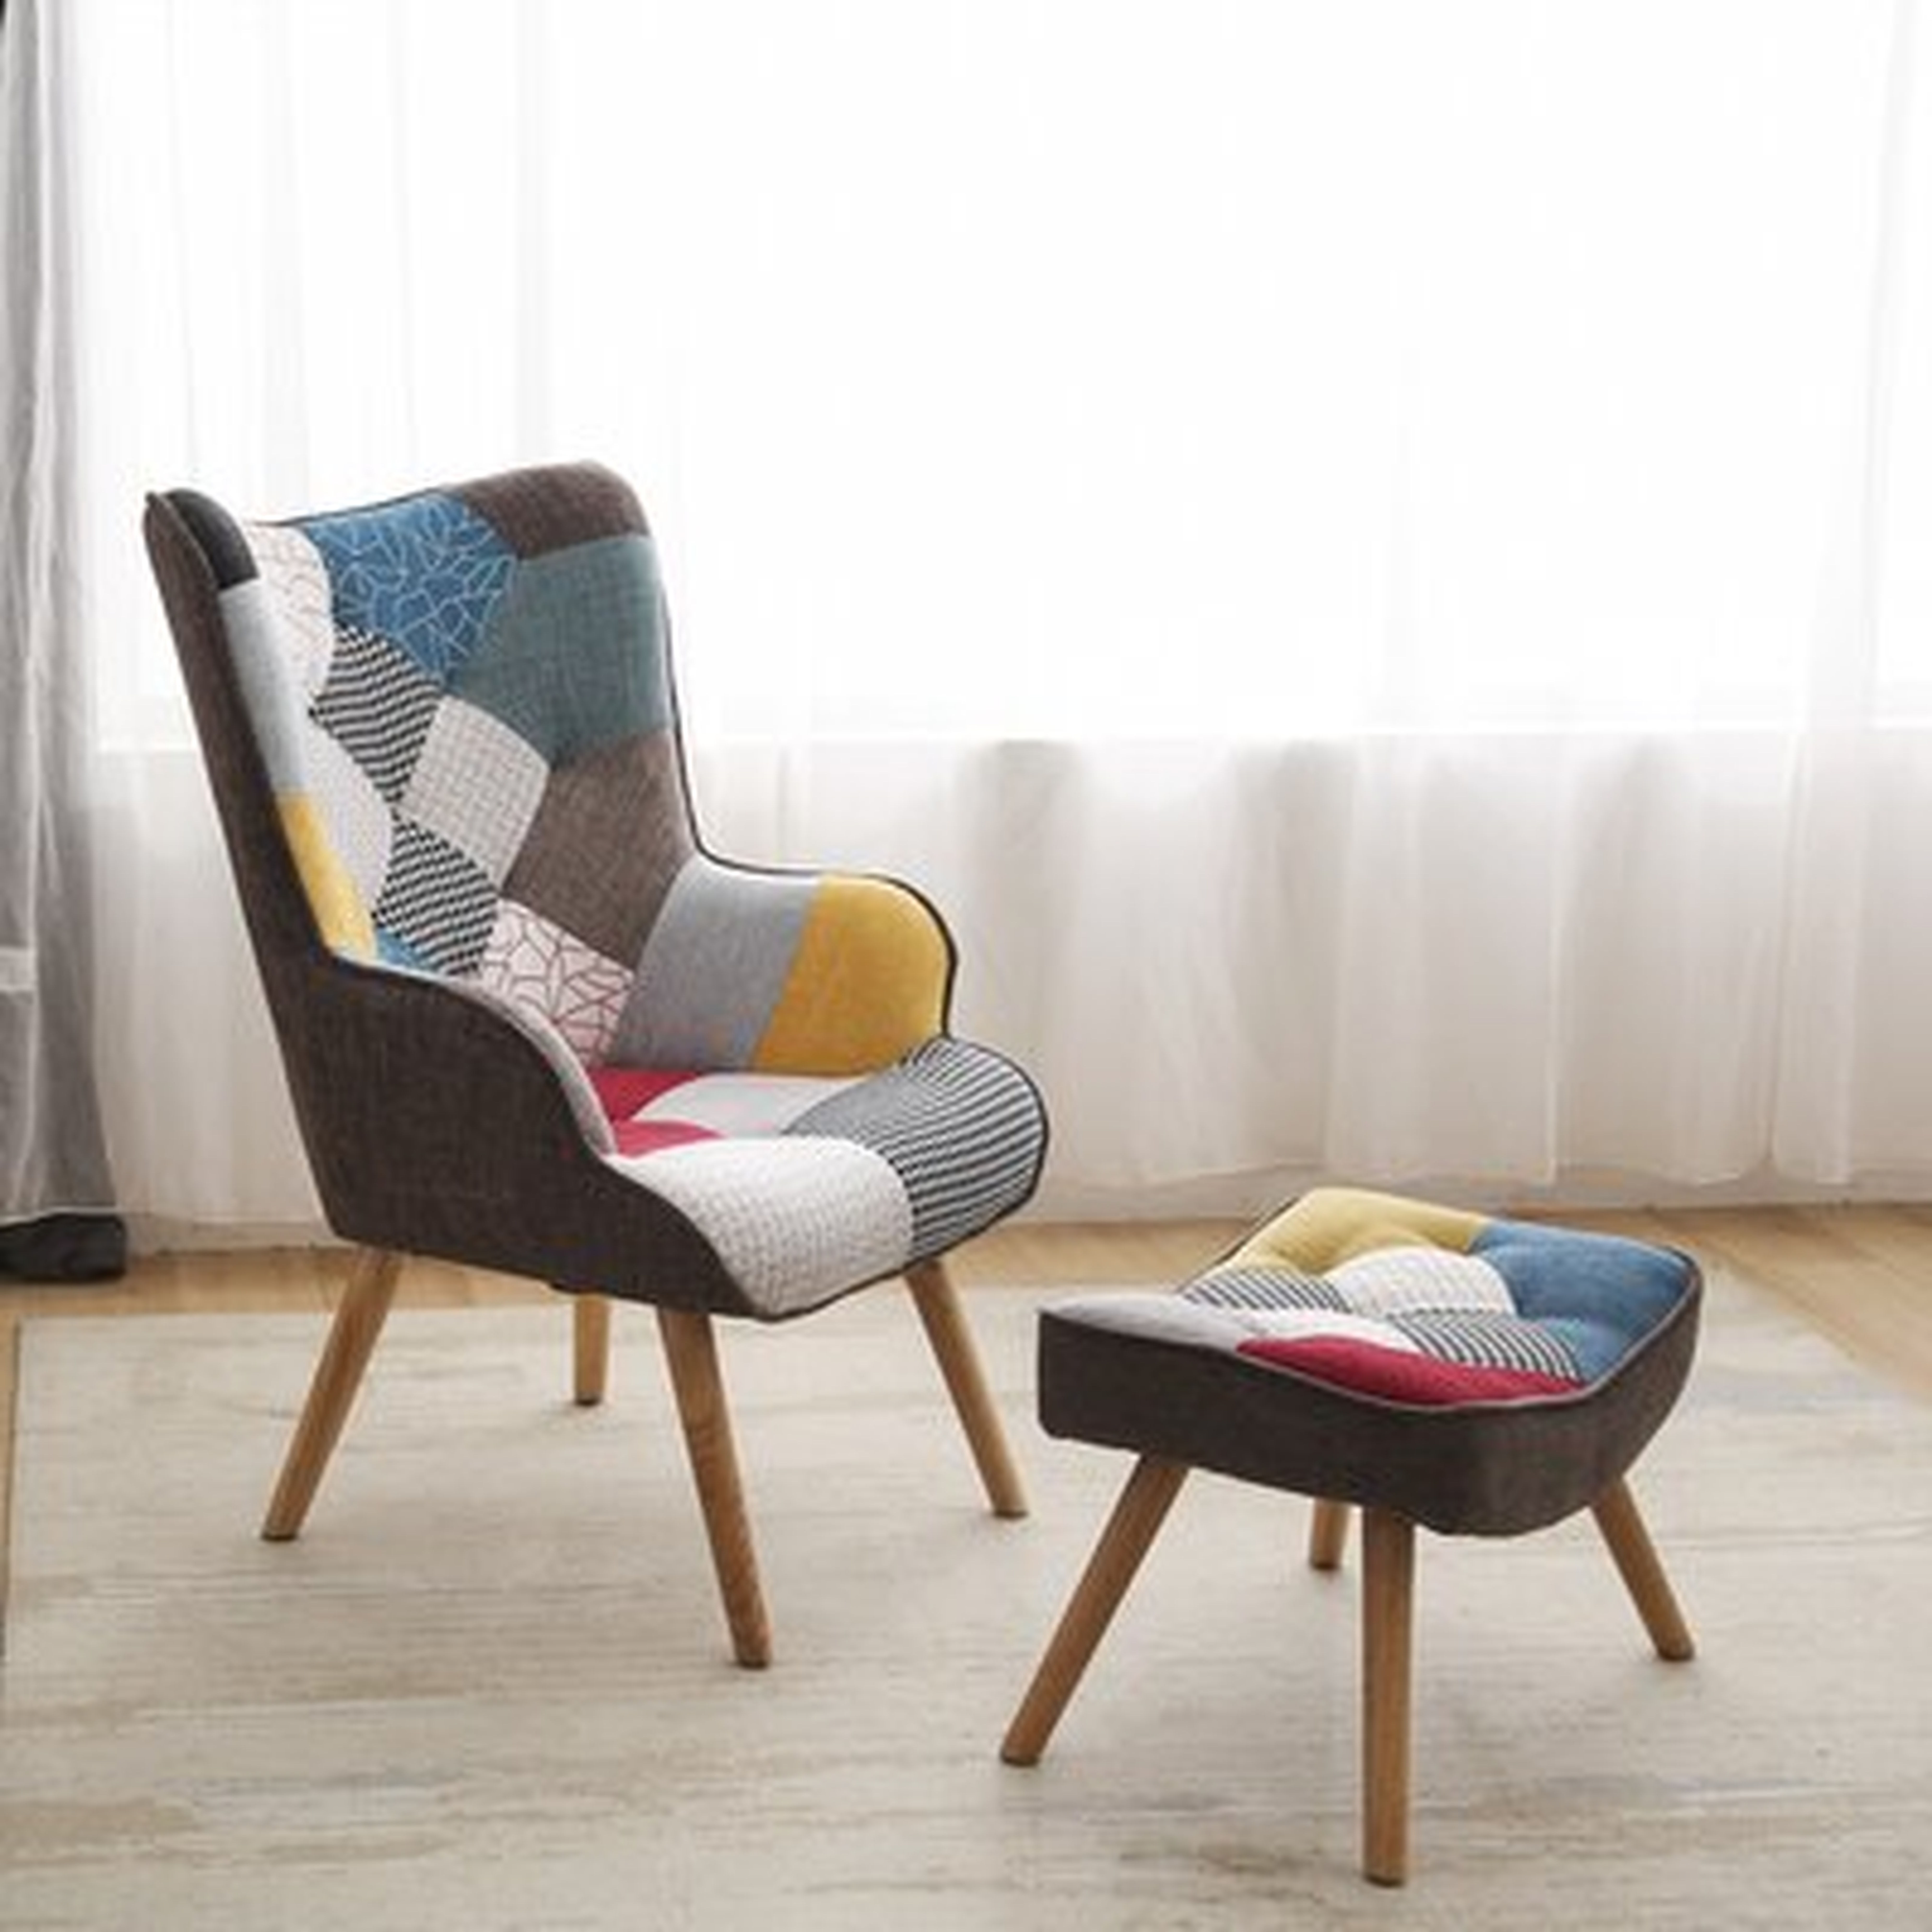 Modern Colourful Accent Chair With Ottoman - Wayfair